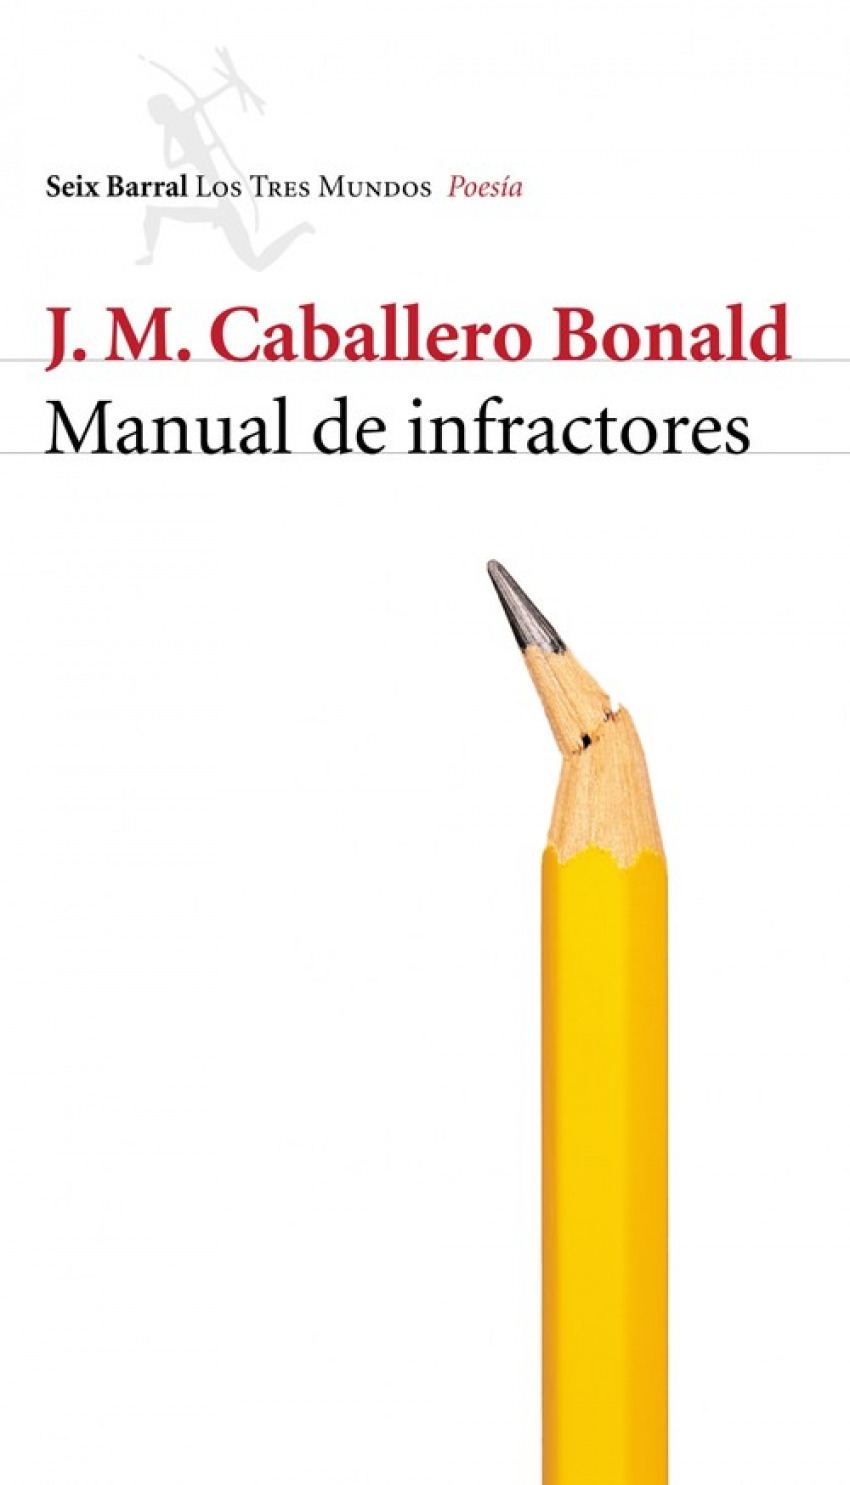 Manual de infractores - J. M. Caballero Bonald